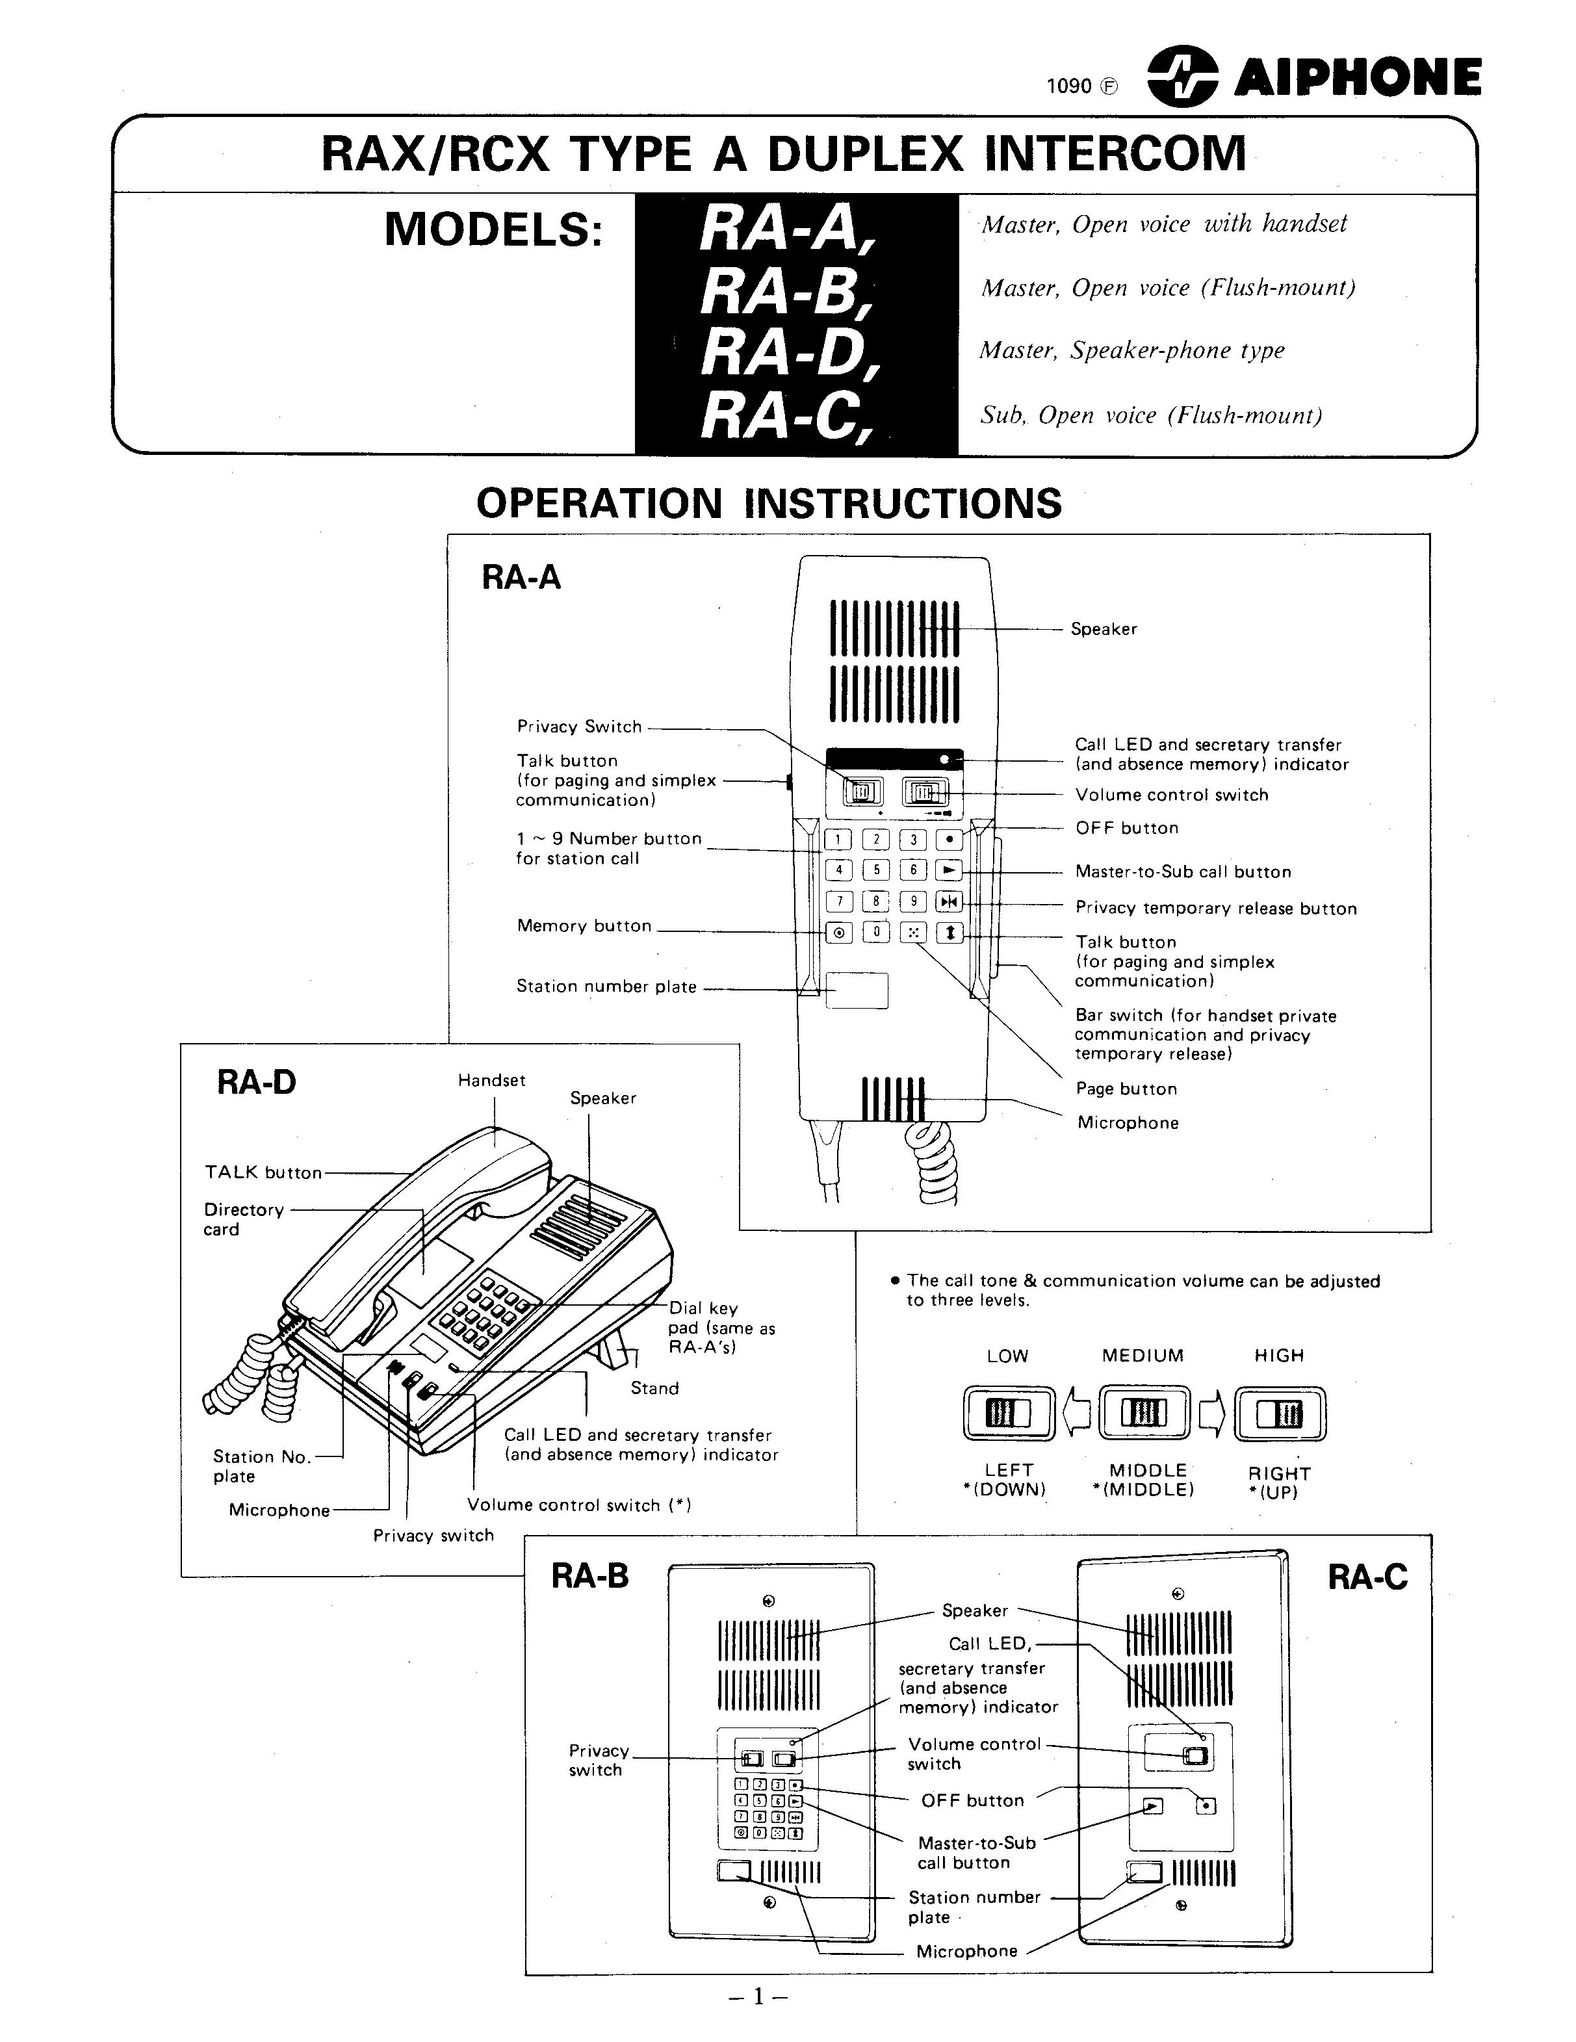 Aiphone RA-A Cell Phone User Manual